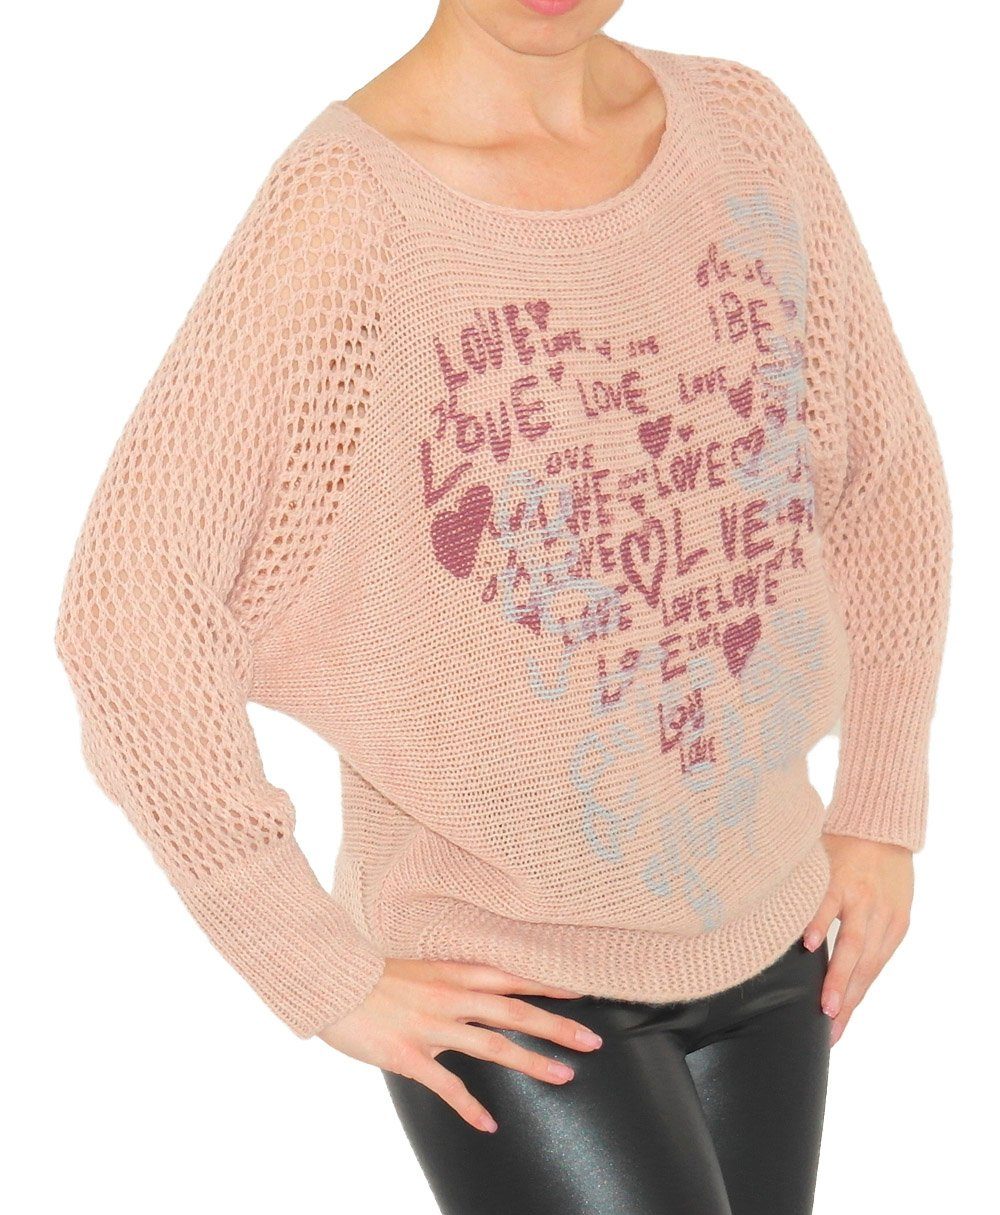 YESET Longpullover Pullover Strick Pulli Top-Netz Wolle rosa Love-Blumen leicht